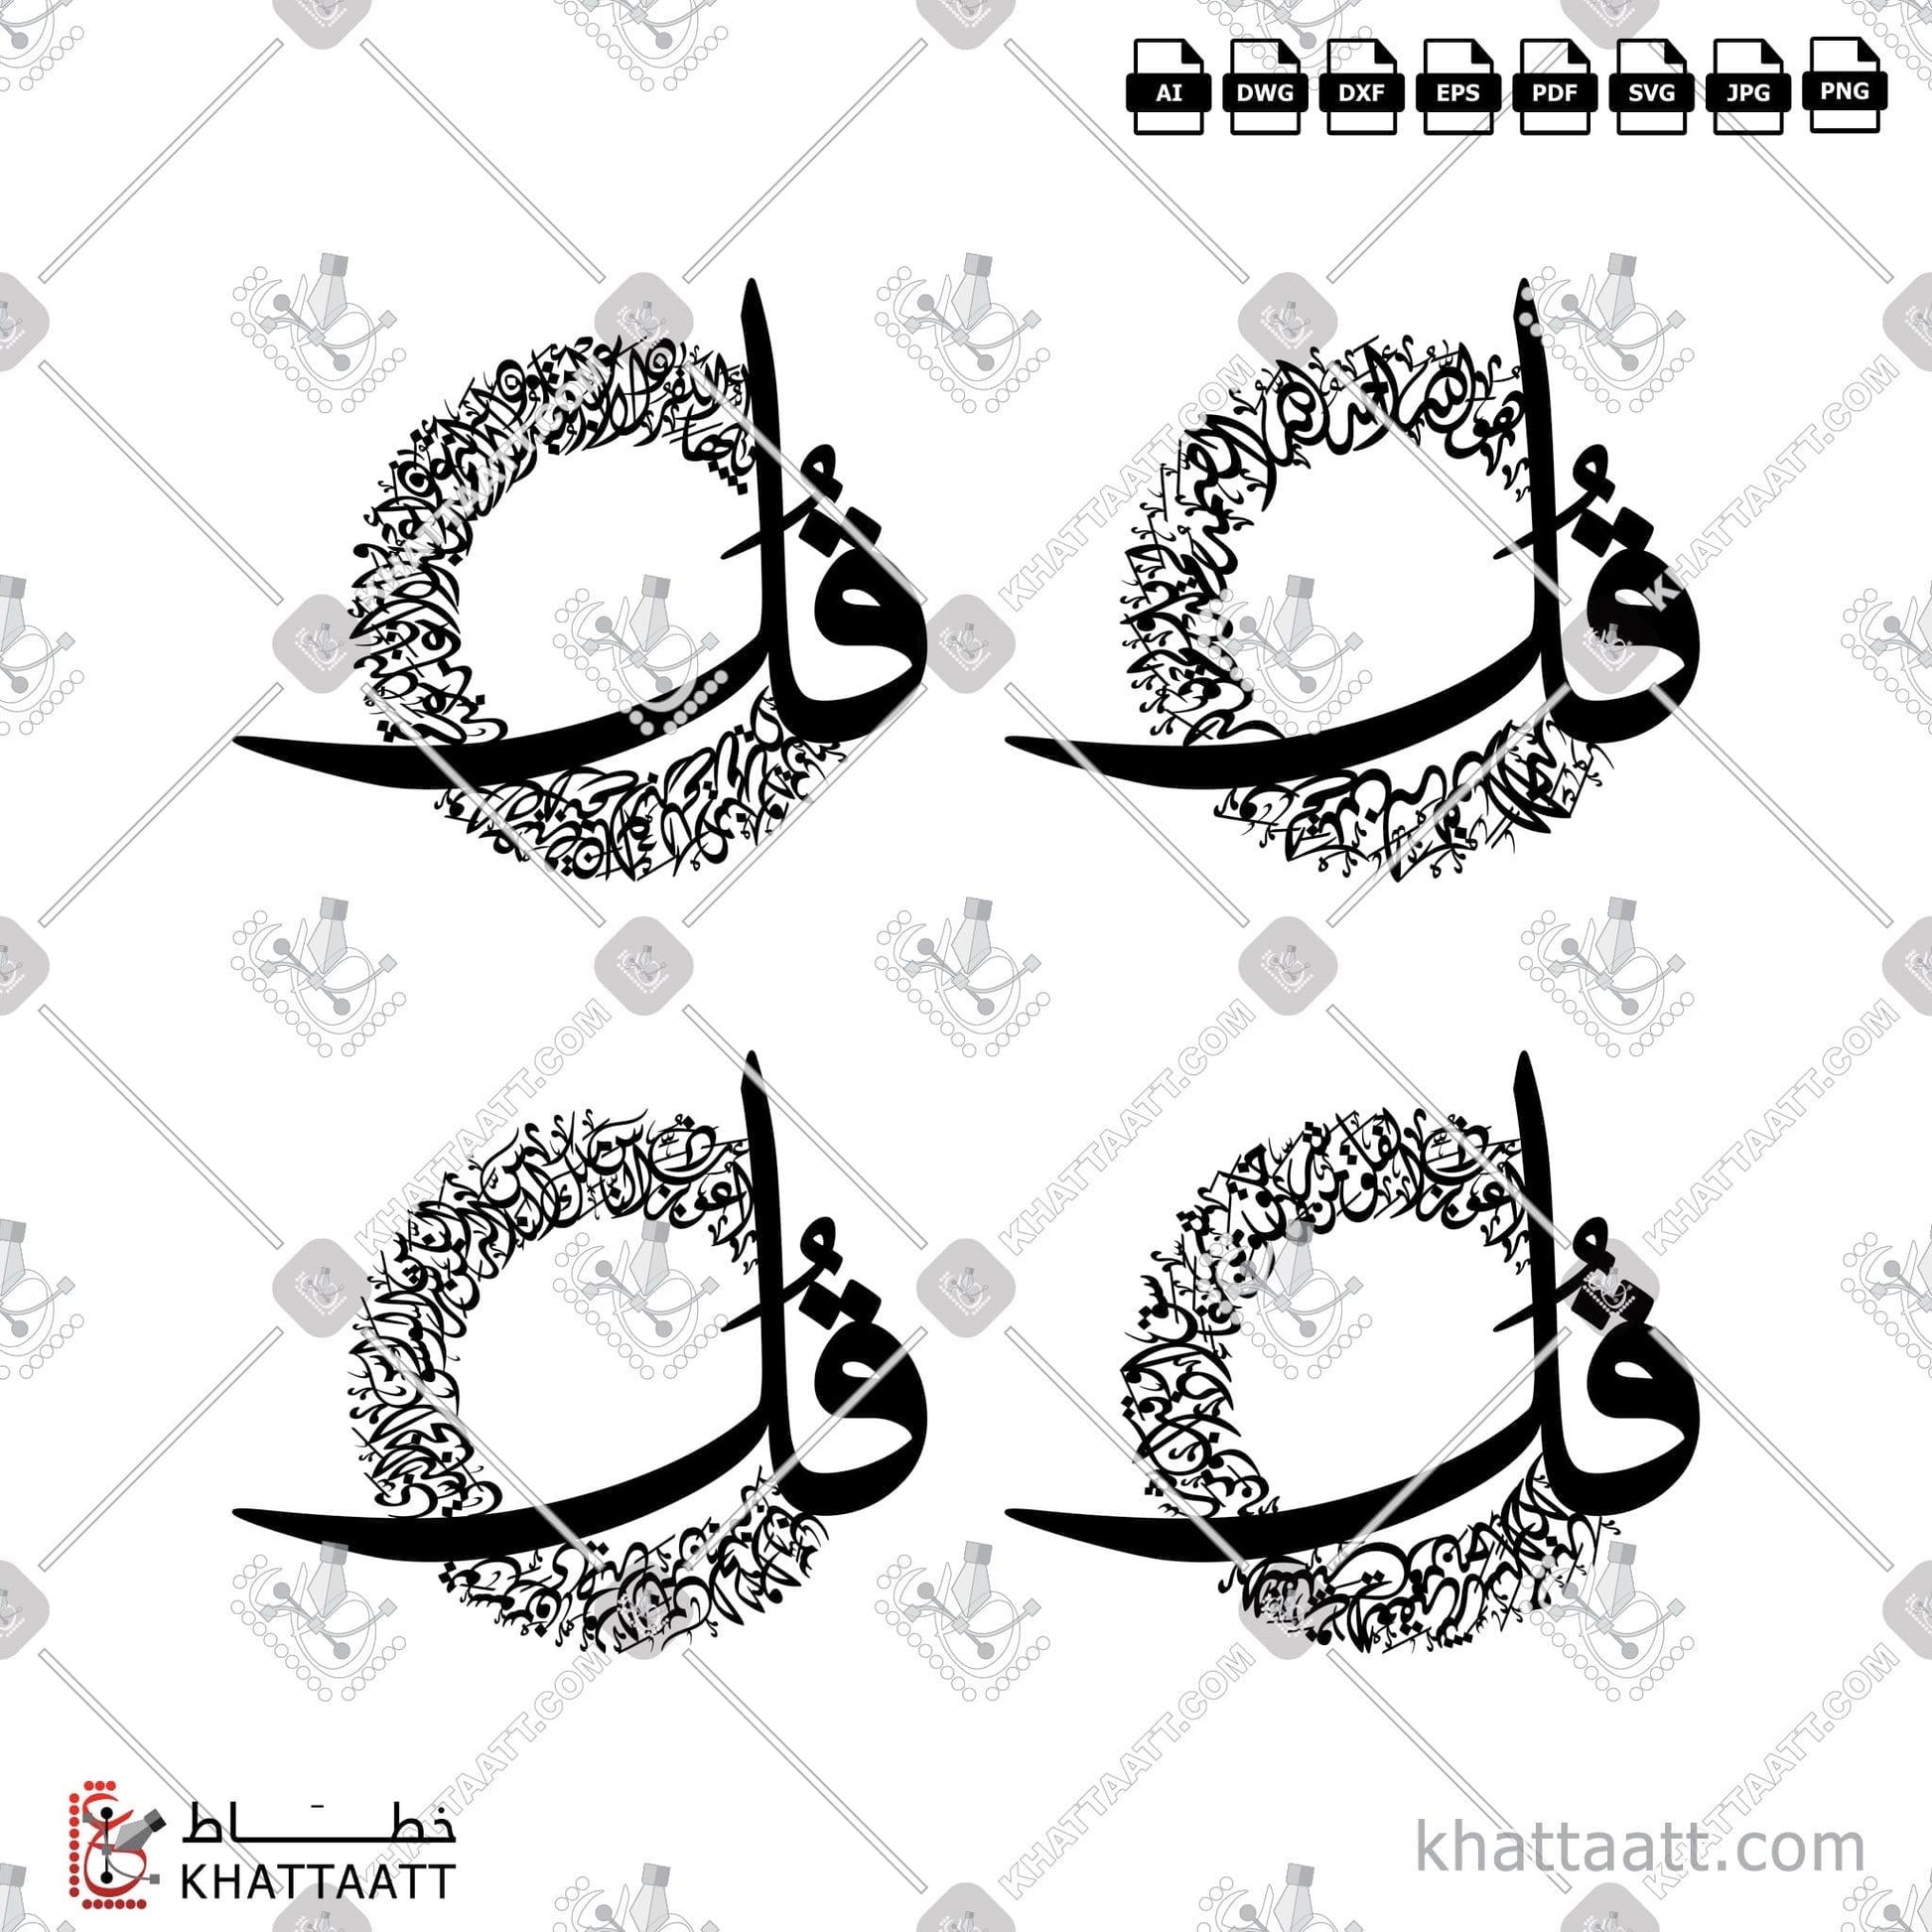 Download Arabic Calligraphy of The 4 Quls - القلاقل الأربعة in Diwani - الخط الديواني in vector and .png